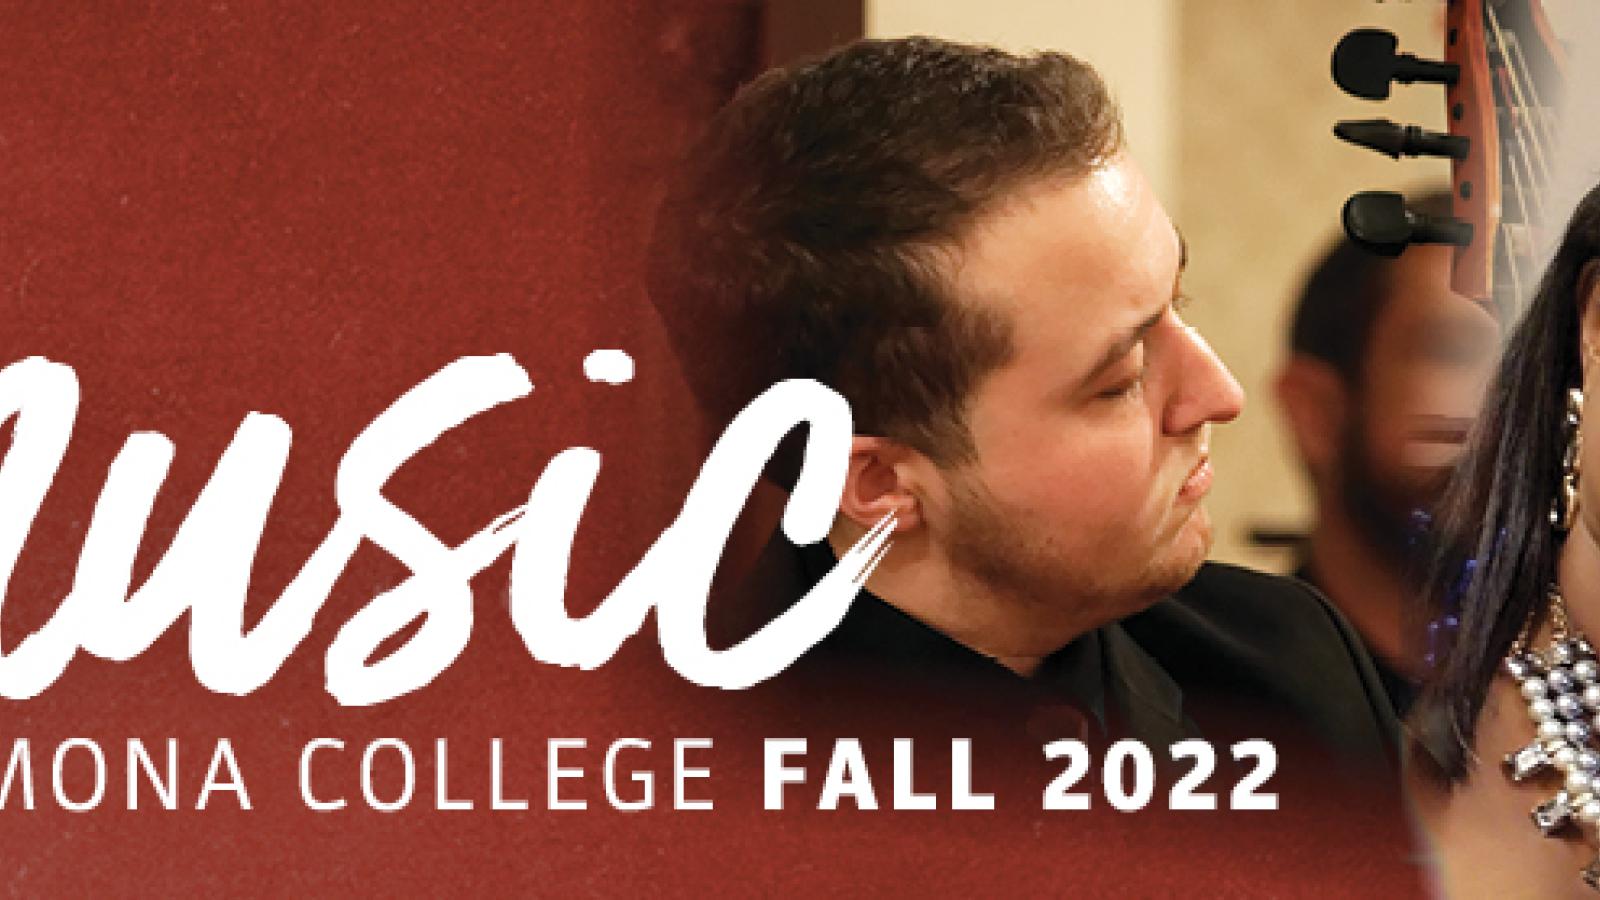 Music at Pomona College Fall 2022